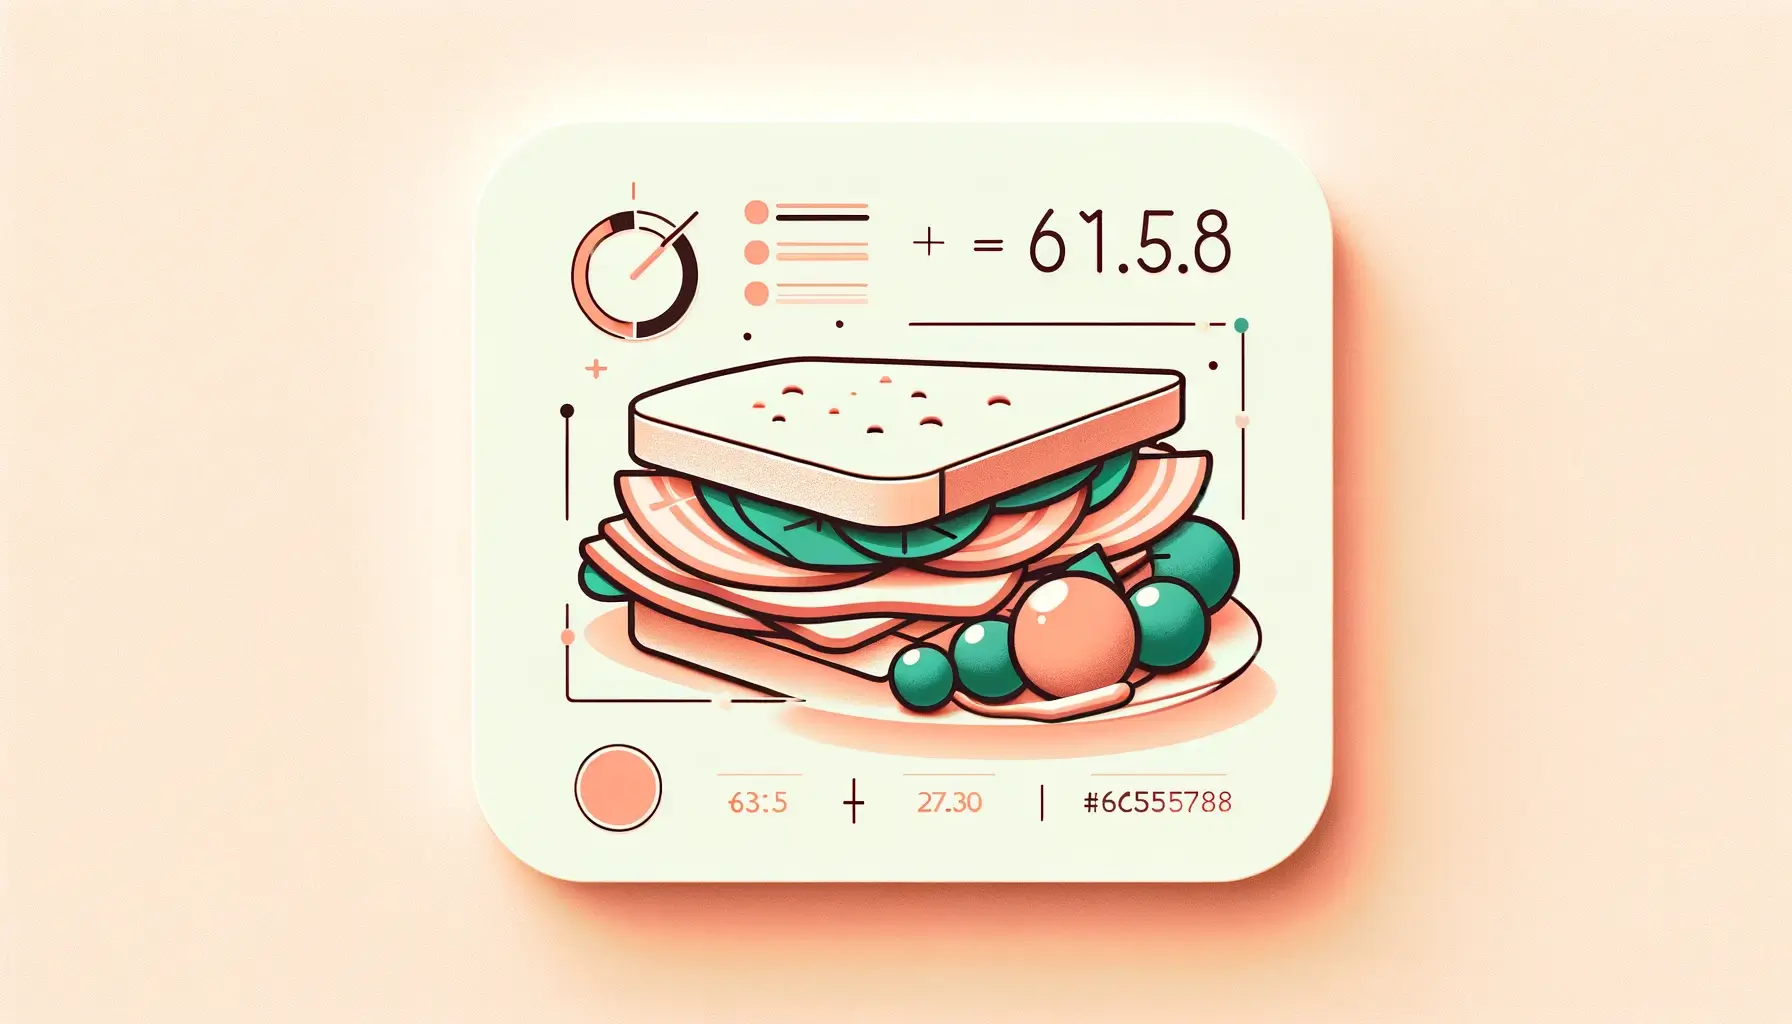 Turkey Club Sandwich Calories Calculator